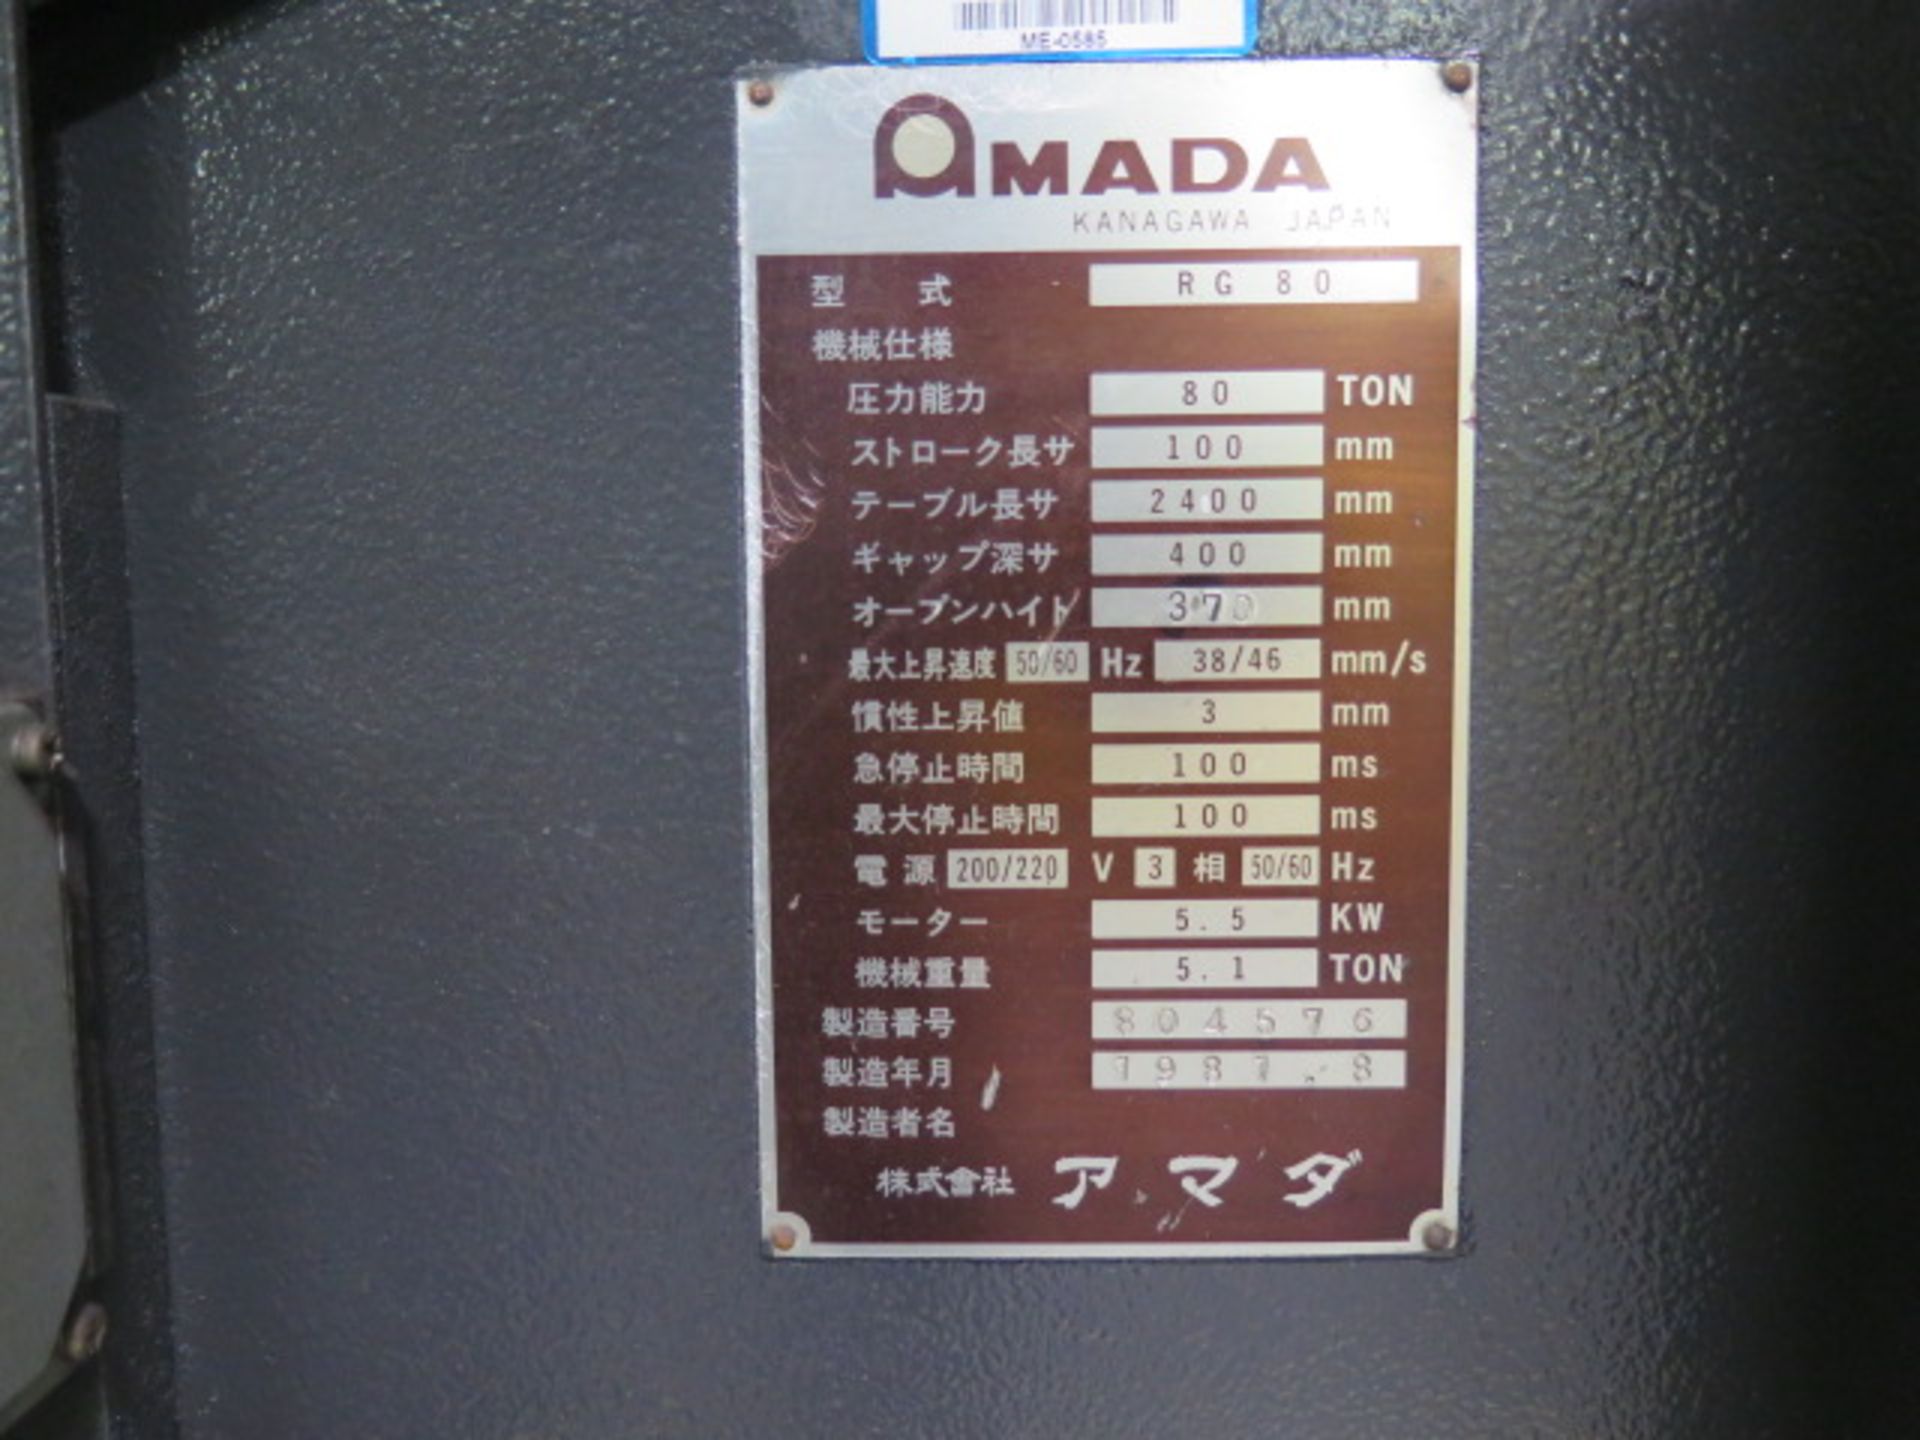 Amada RG-80 80-Ton x 8' CNC Press Brake s/n 804576 w/ Amada NC9-EX II, 8' Bed Length, SOLD AS IS - Image 12 of 12